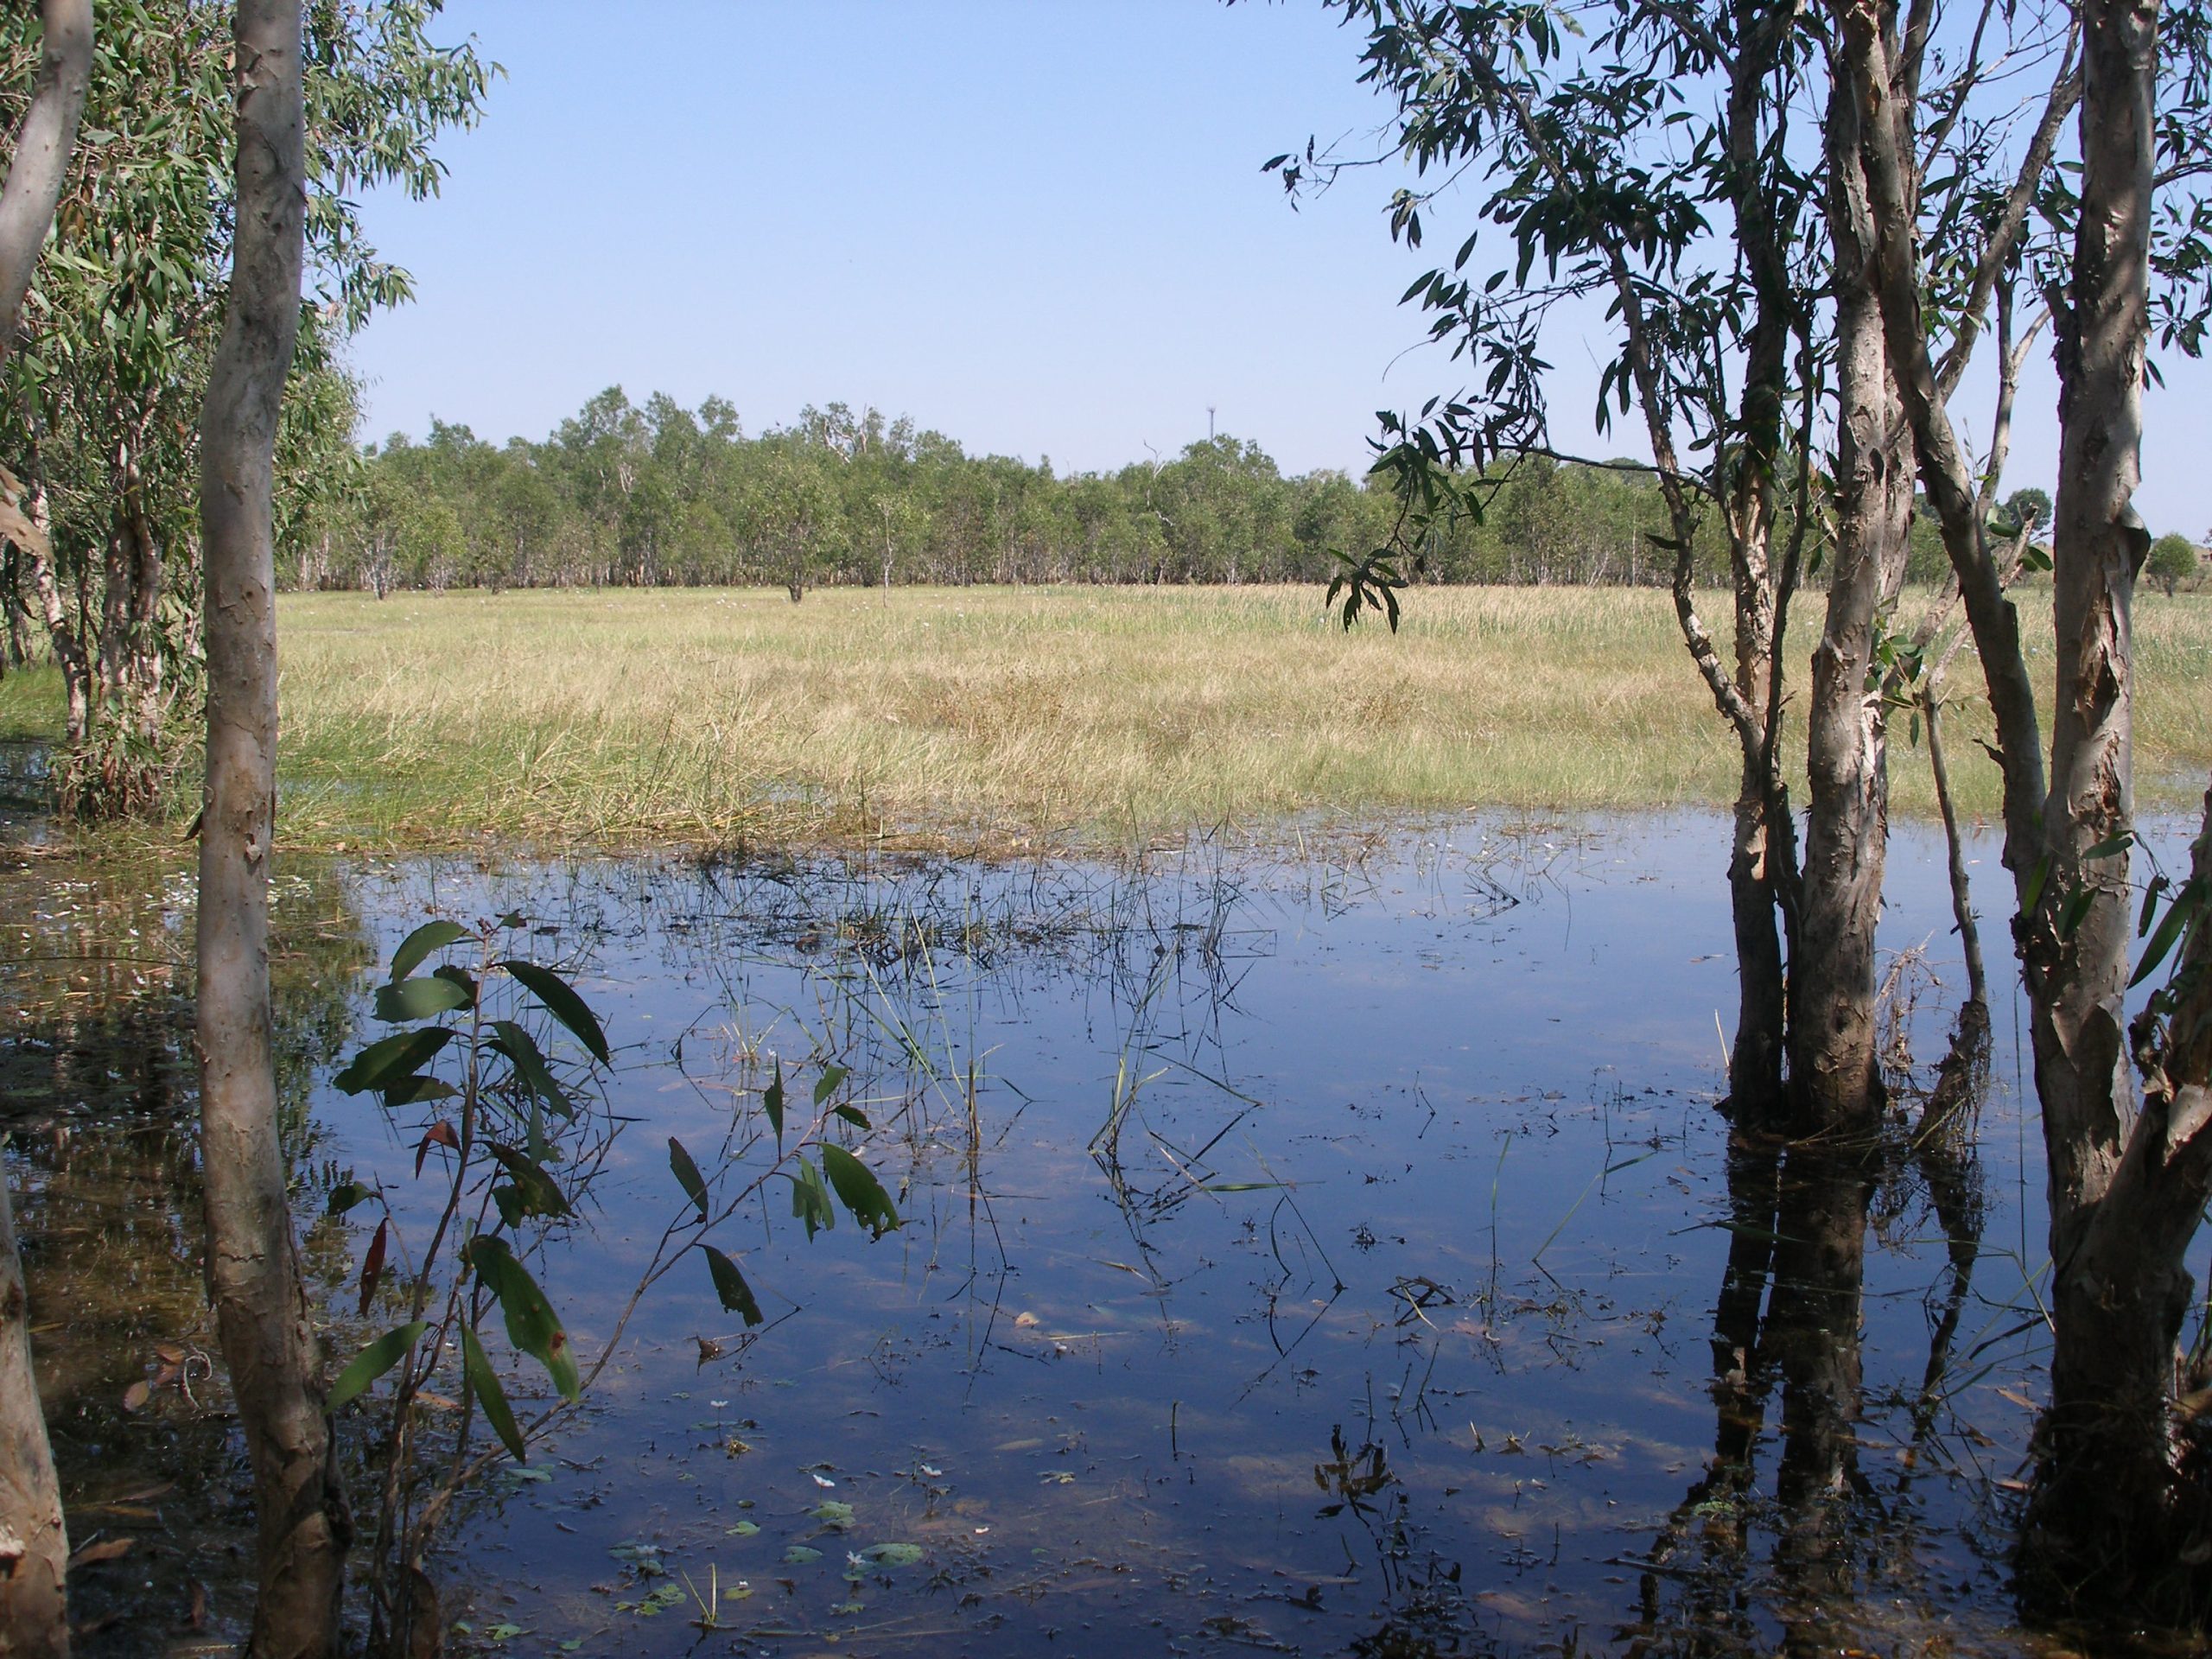 intertidal mangrove zone